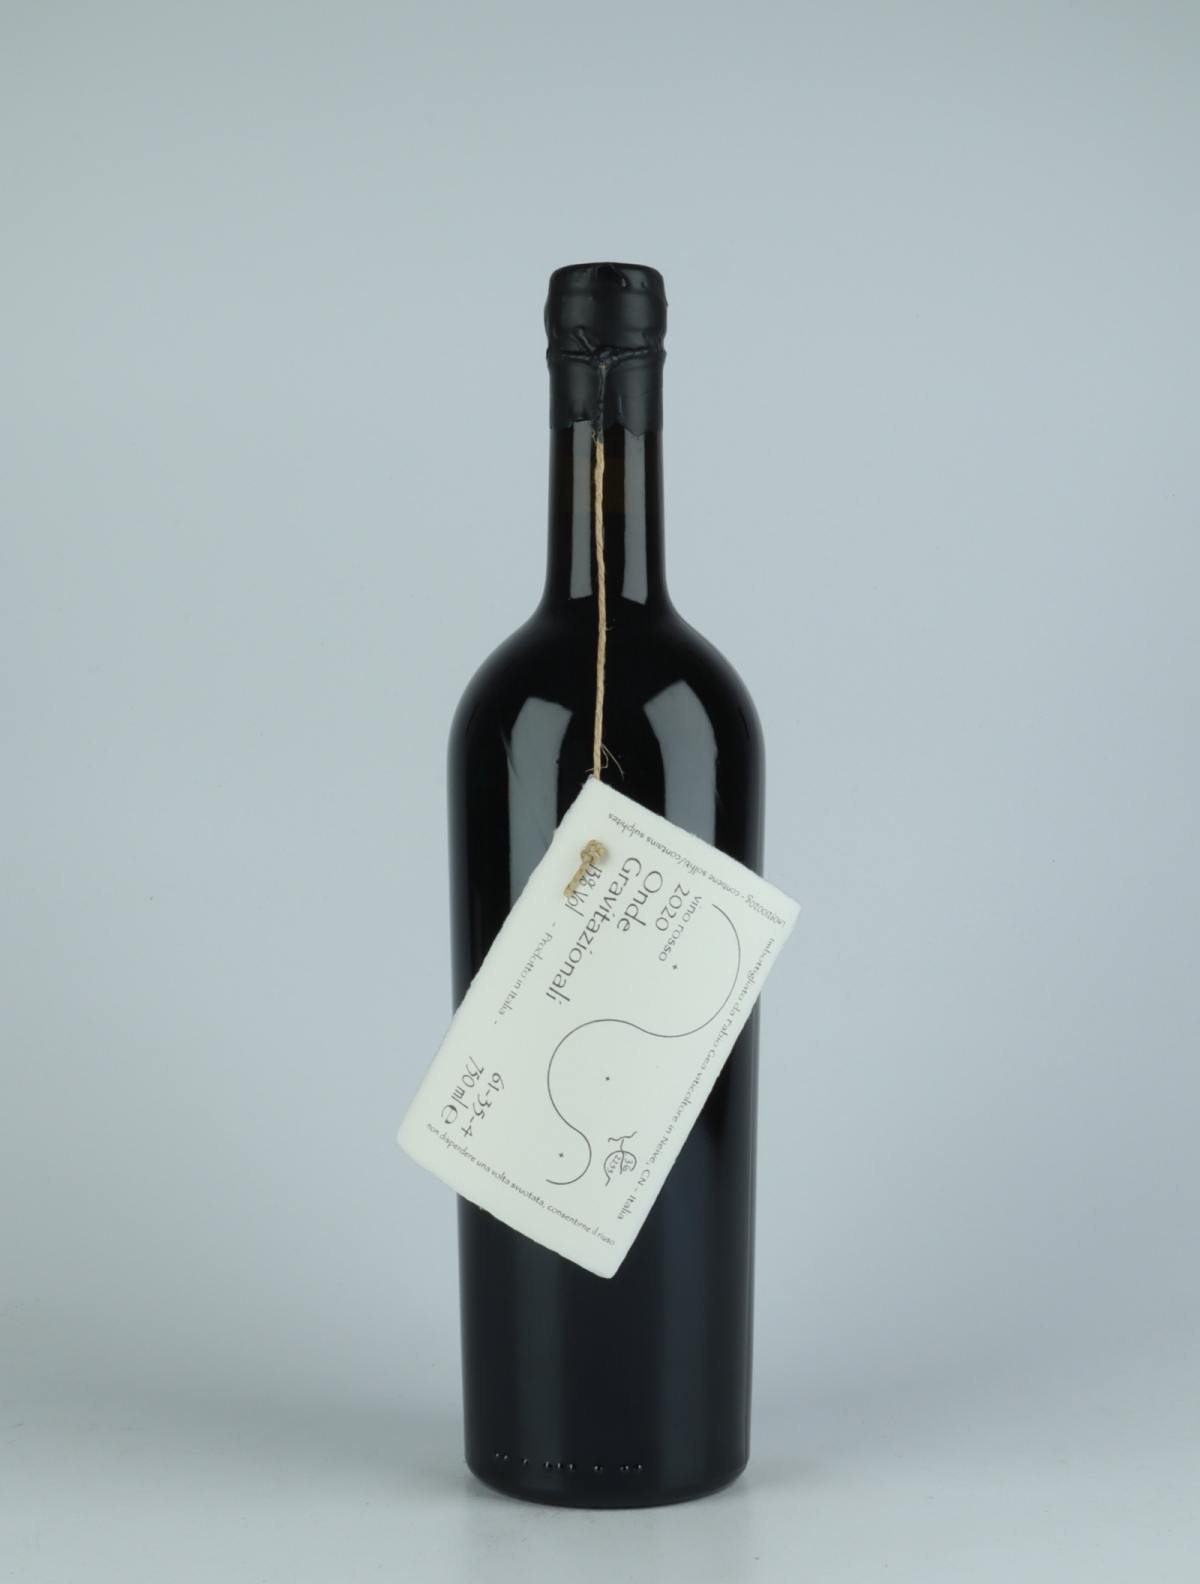 A bottle 2020 Onde Gravitazionali Red wine from Fabio Gea, Piedmont in Italy